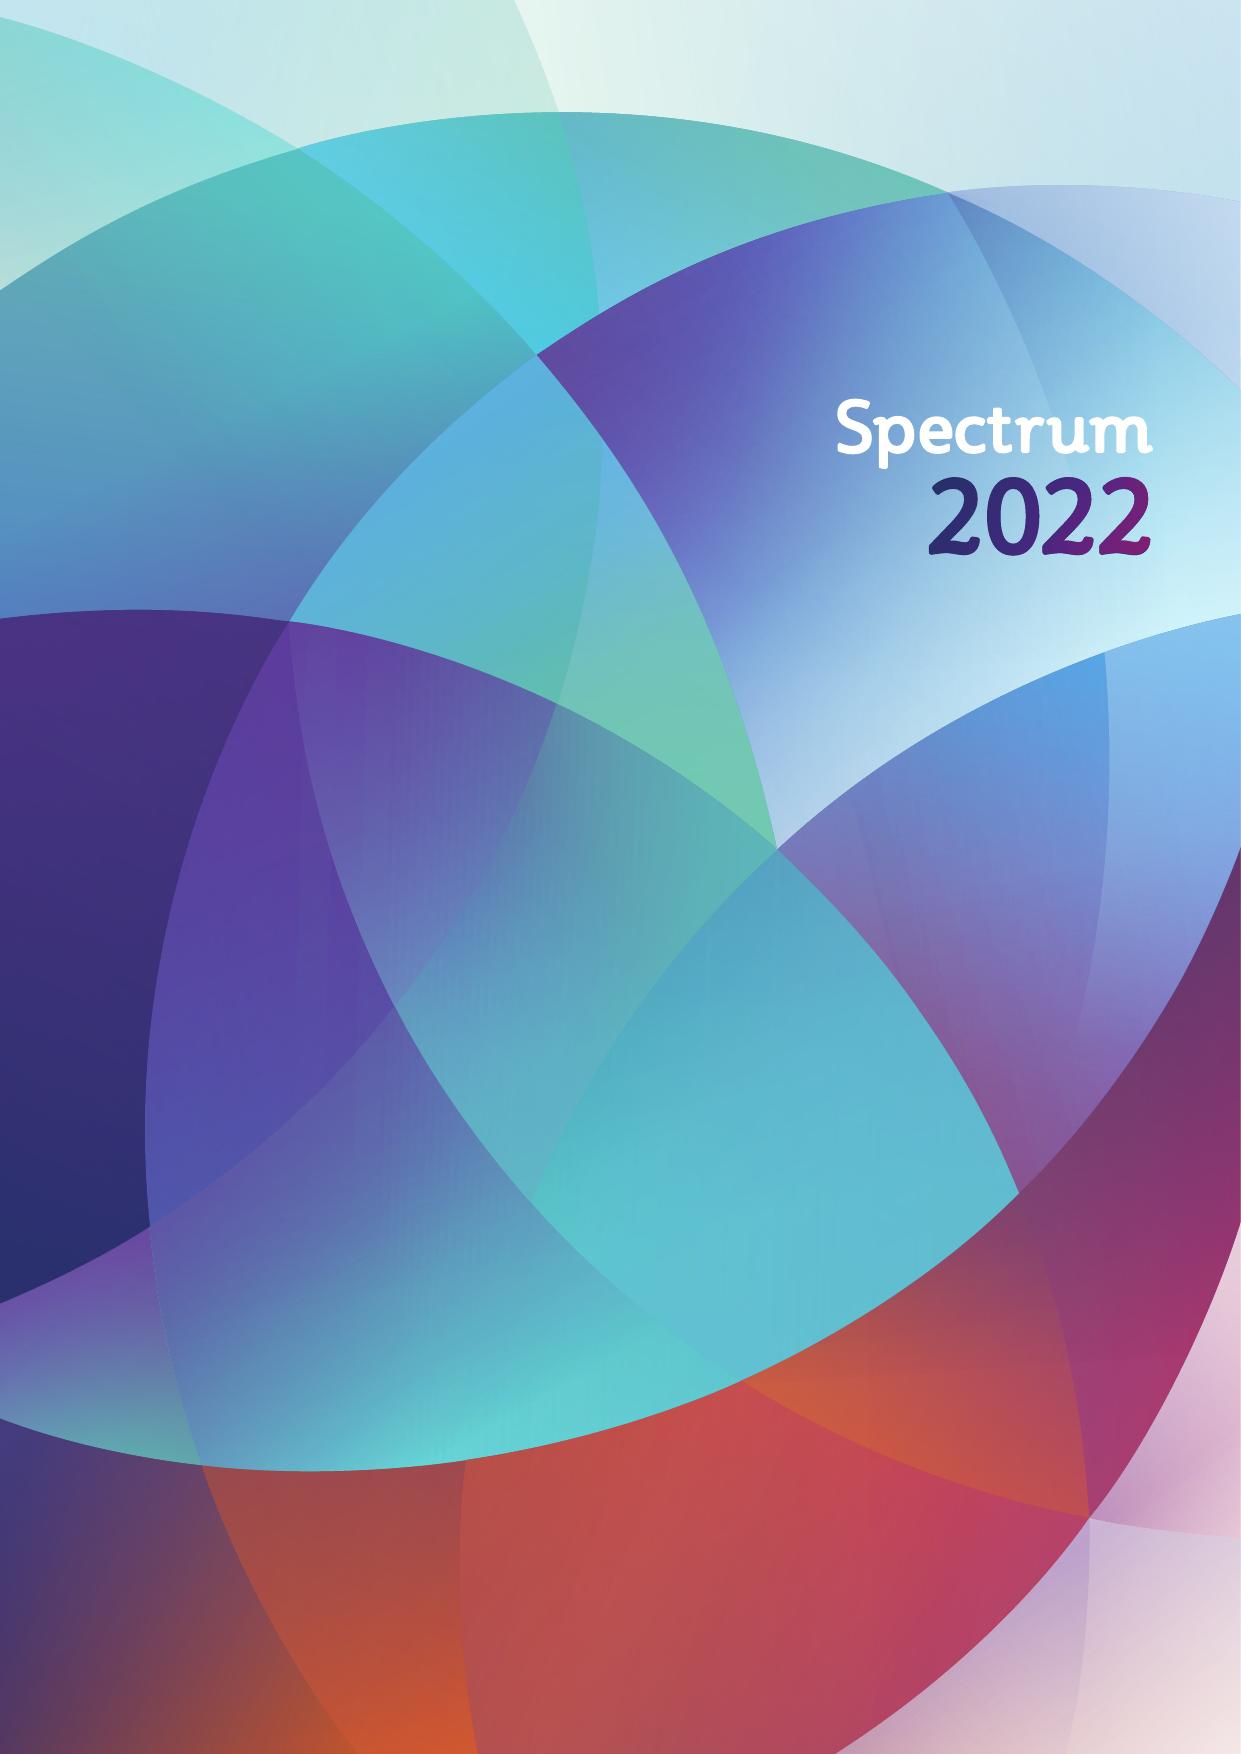  2022 Annual Report